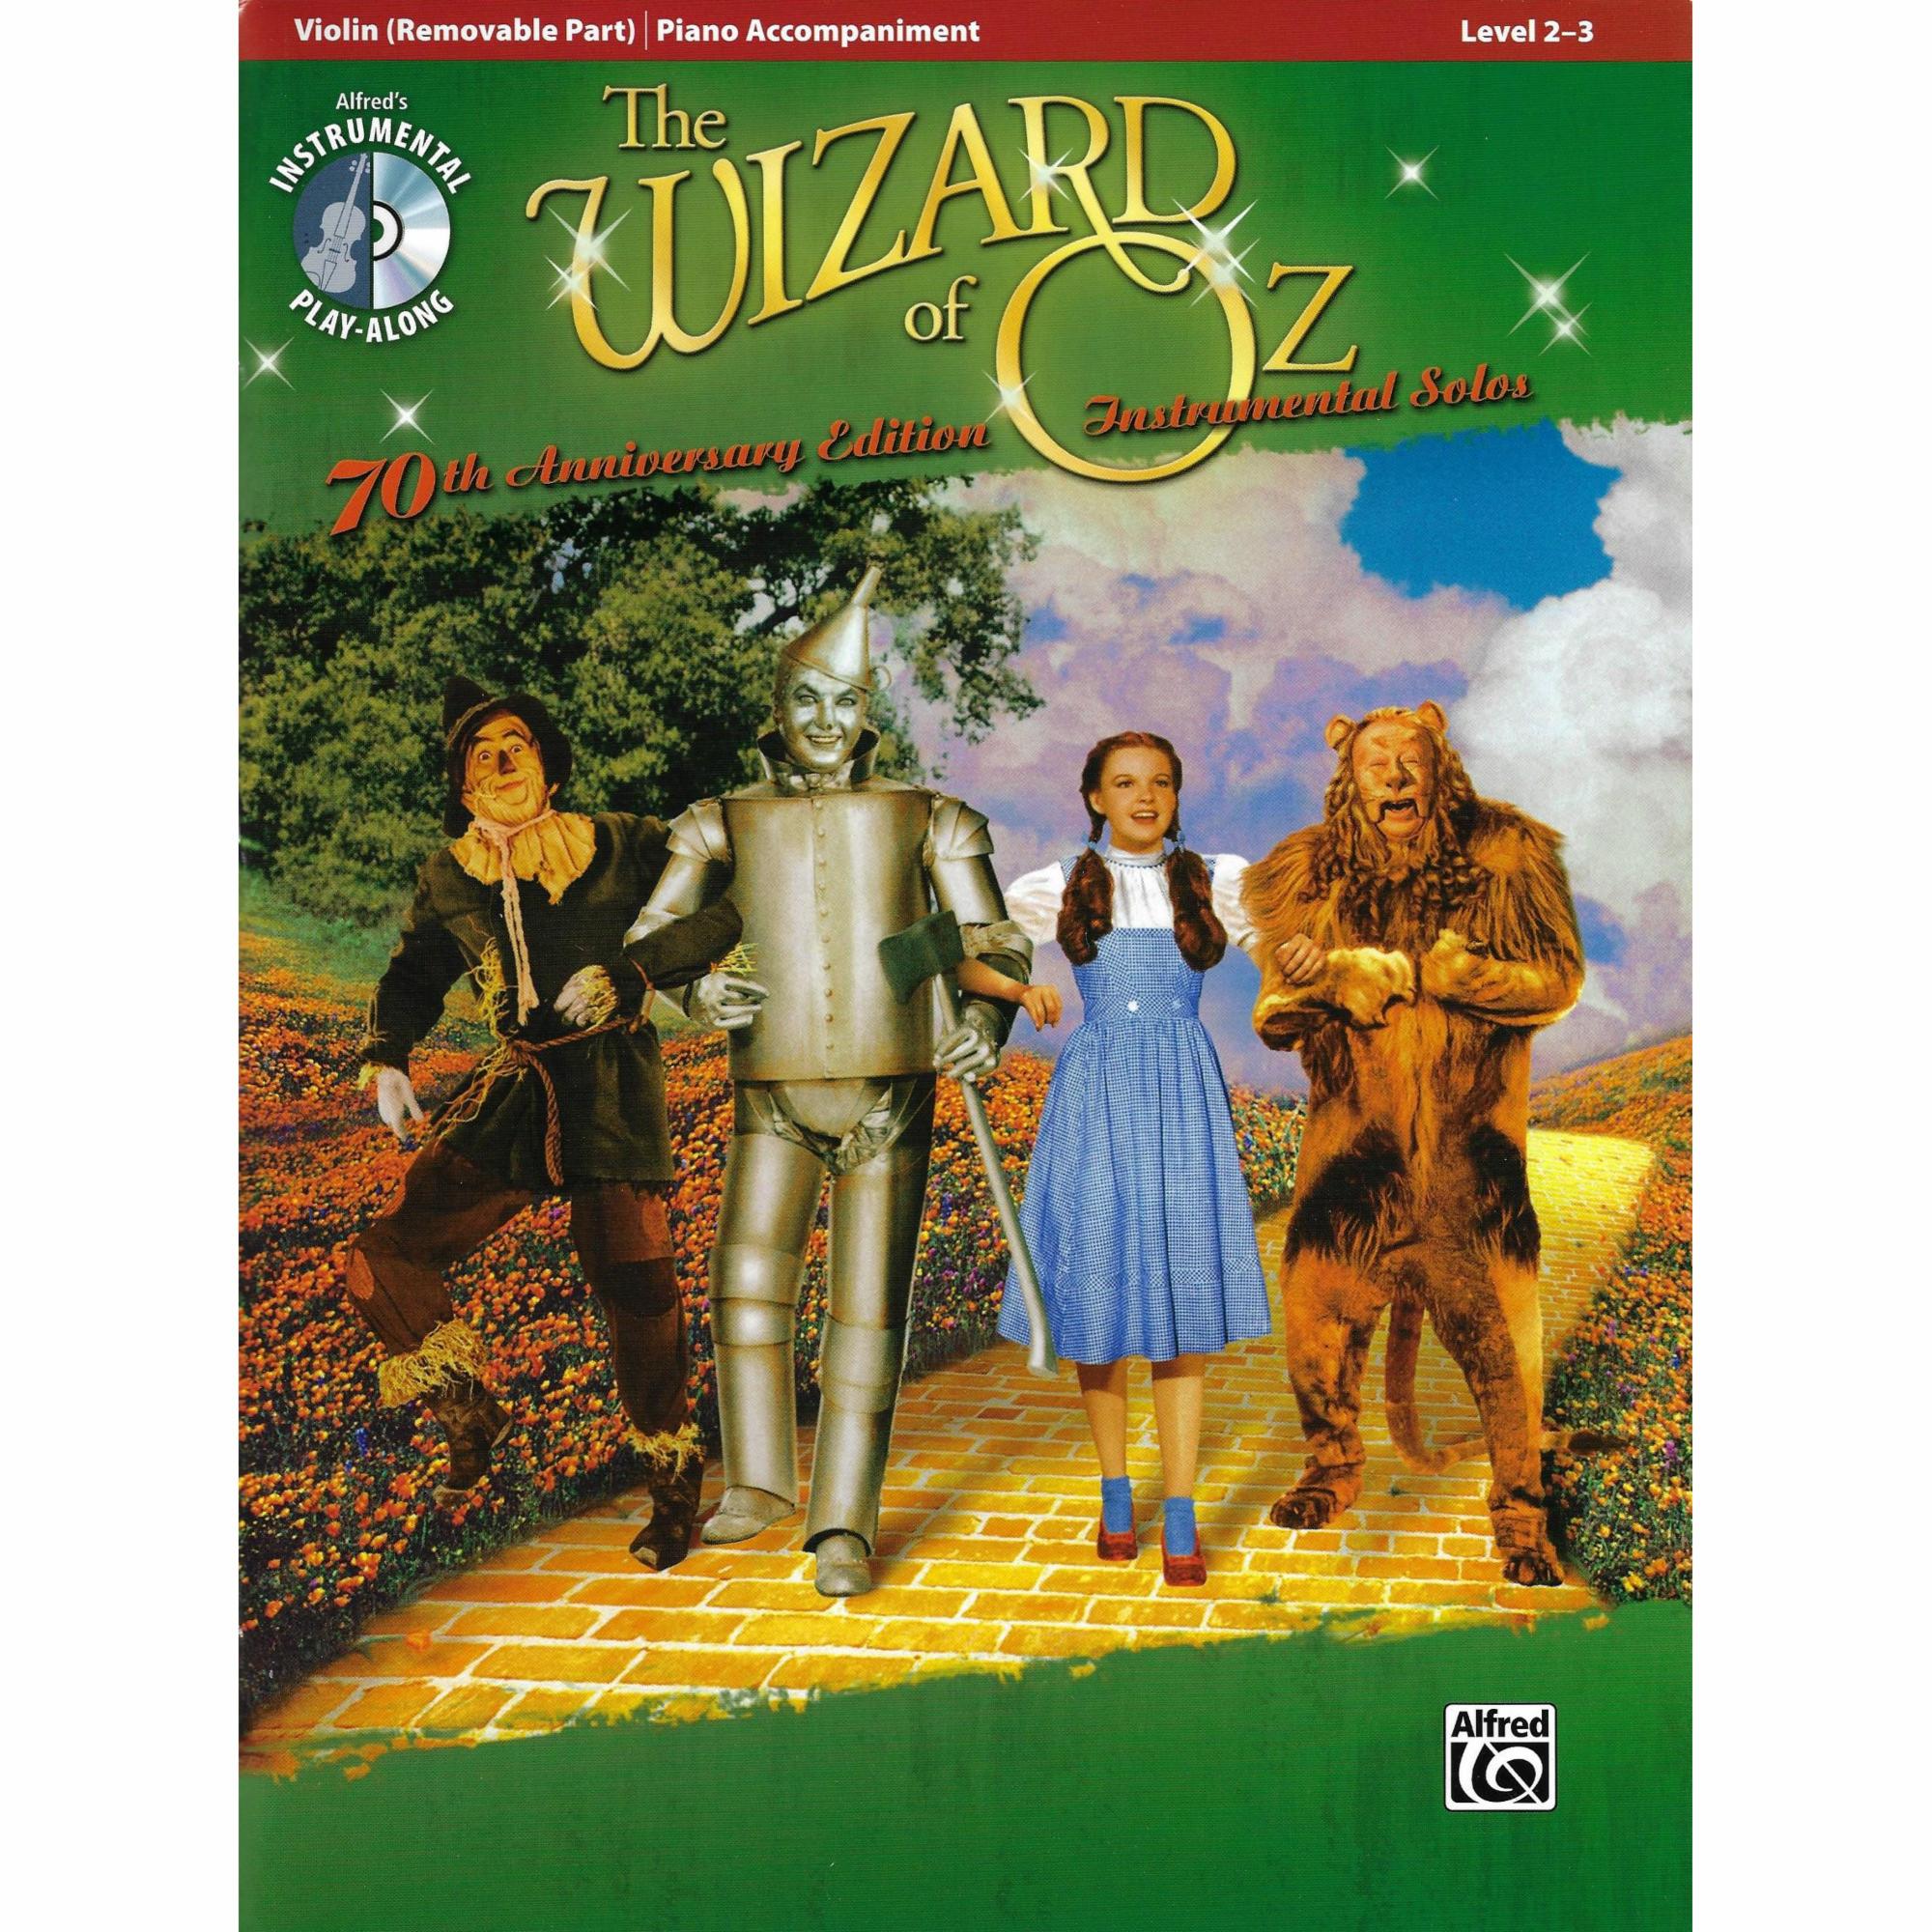 The Wizard of Oz for Violin, Viola, or Cello and Piano